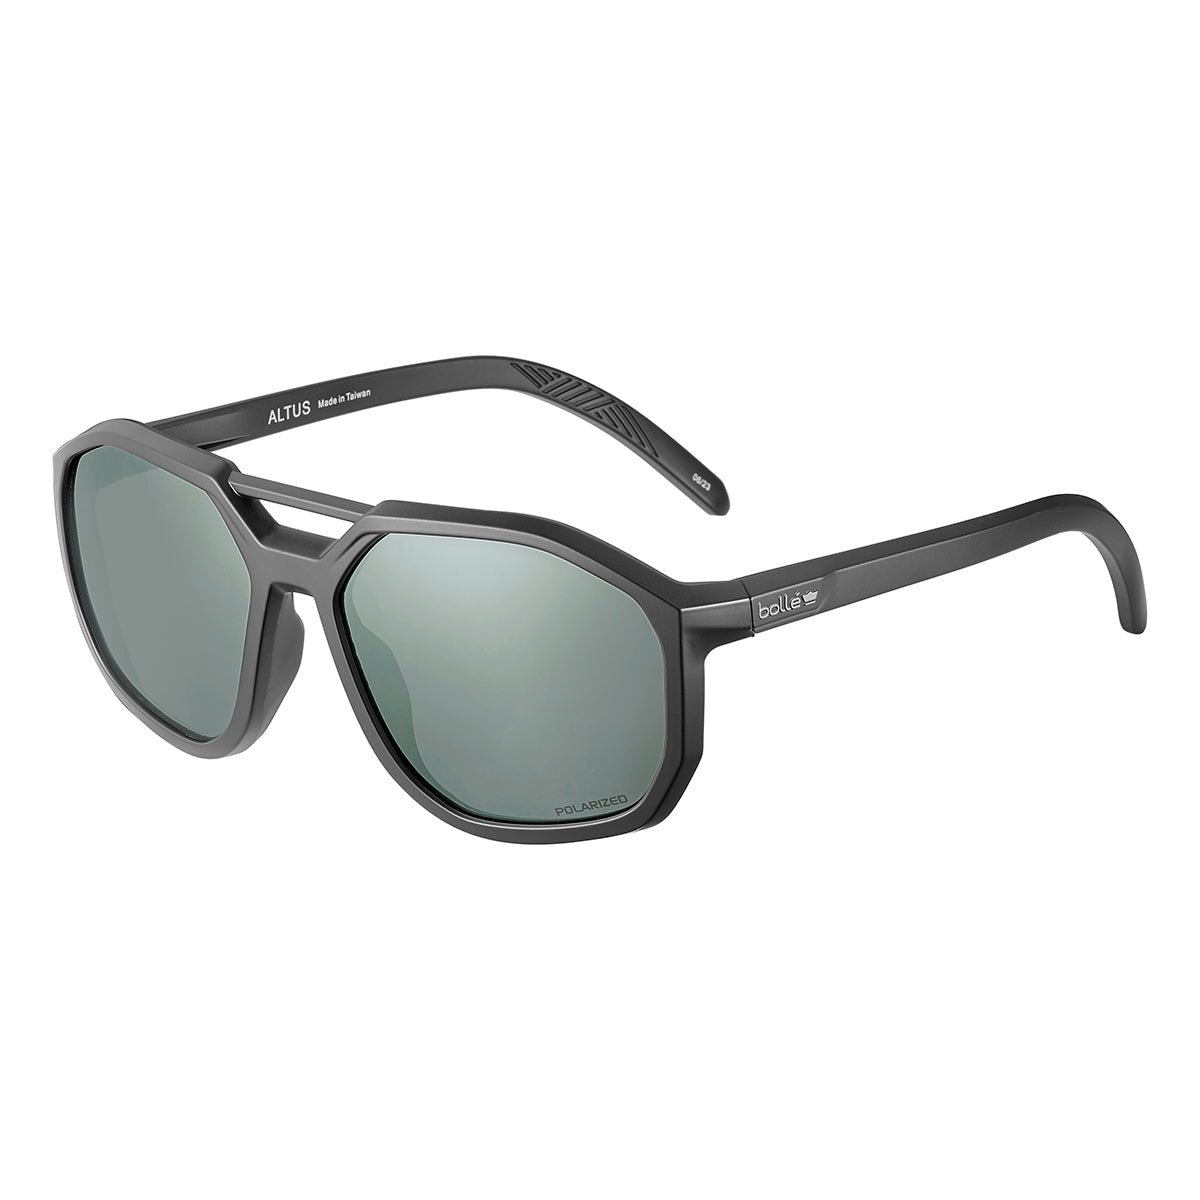 Bolle ALTUS Silver Flash Polarized Lifestyle Sunglasses